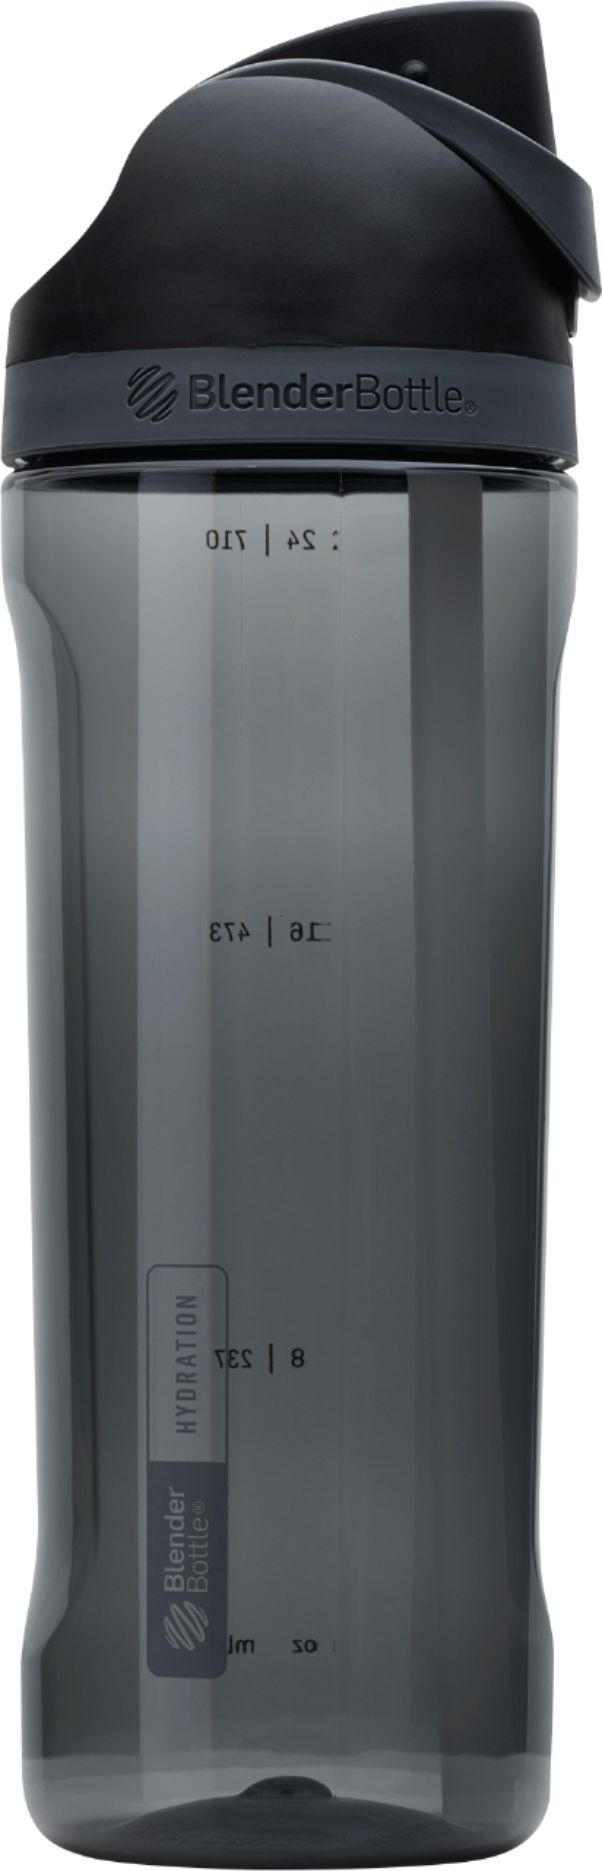 BlenderBottle Radian 26-Oz. Thermoflask Water Bottle/Shaker Cup Black  C02968 - Best Buy